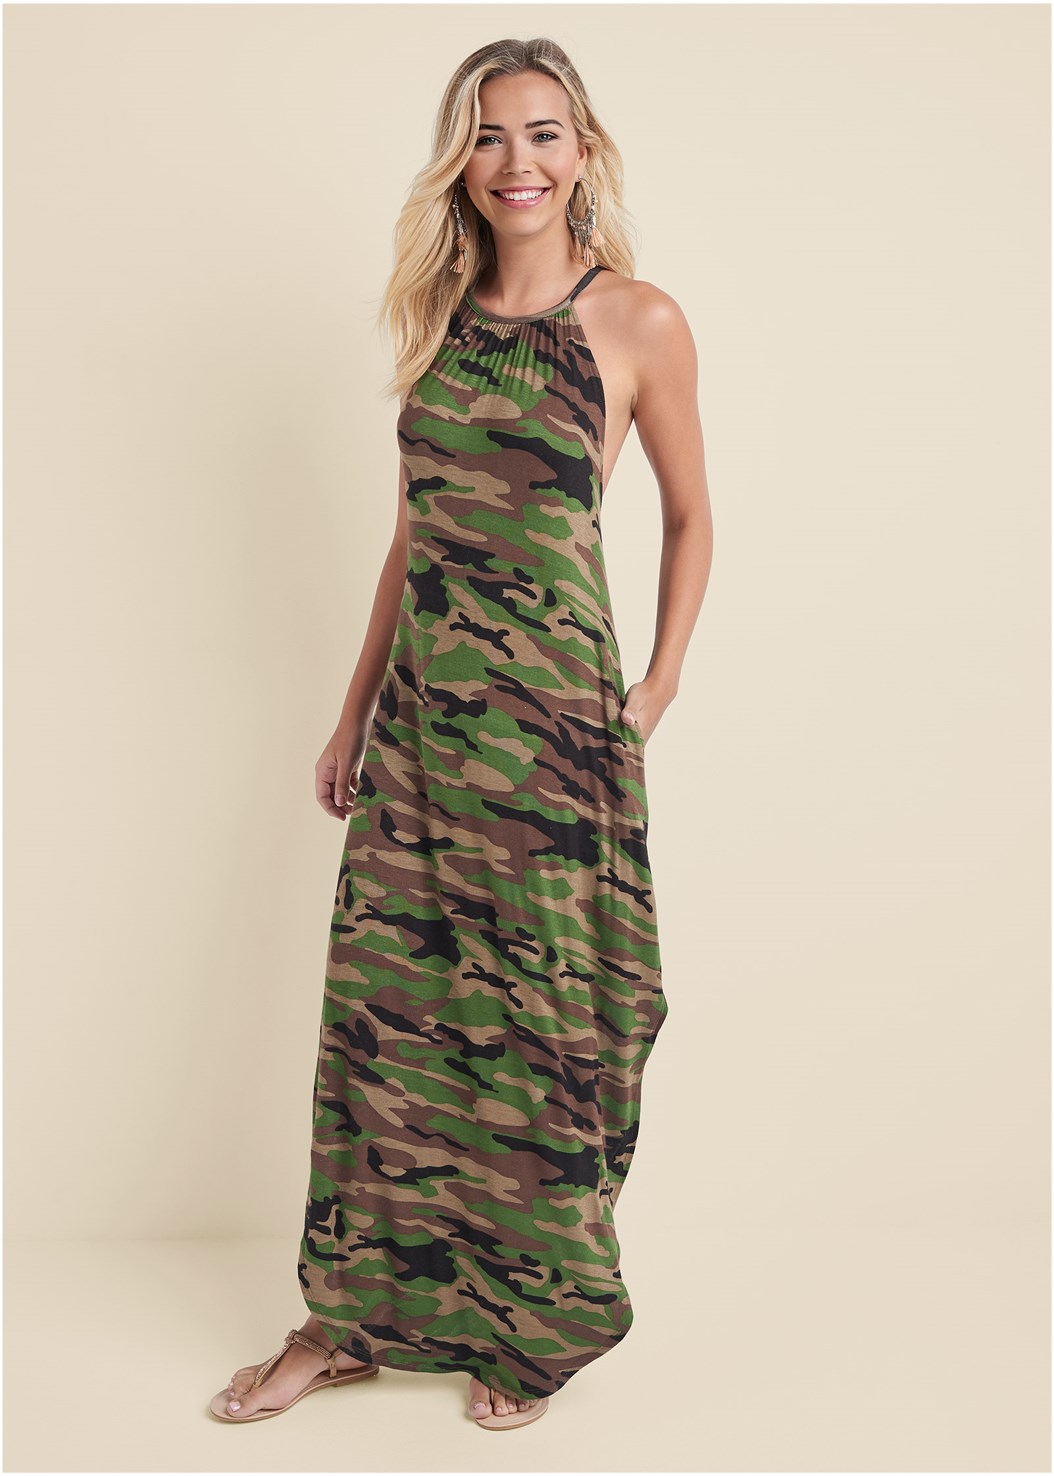 Camo Maxi Dress in Olive Multi | VENUS